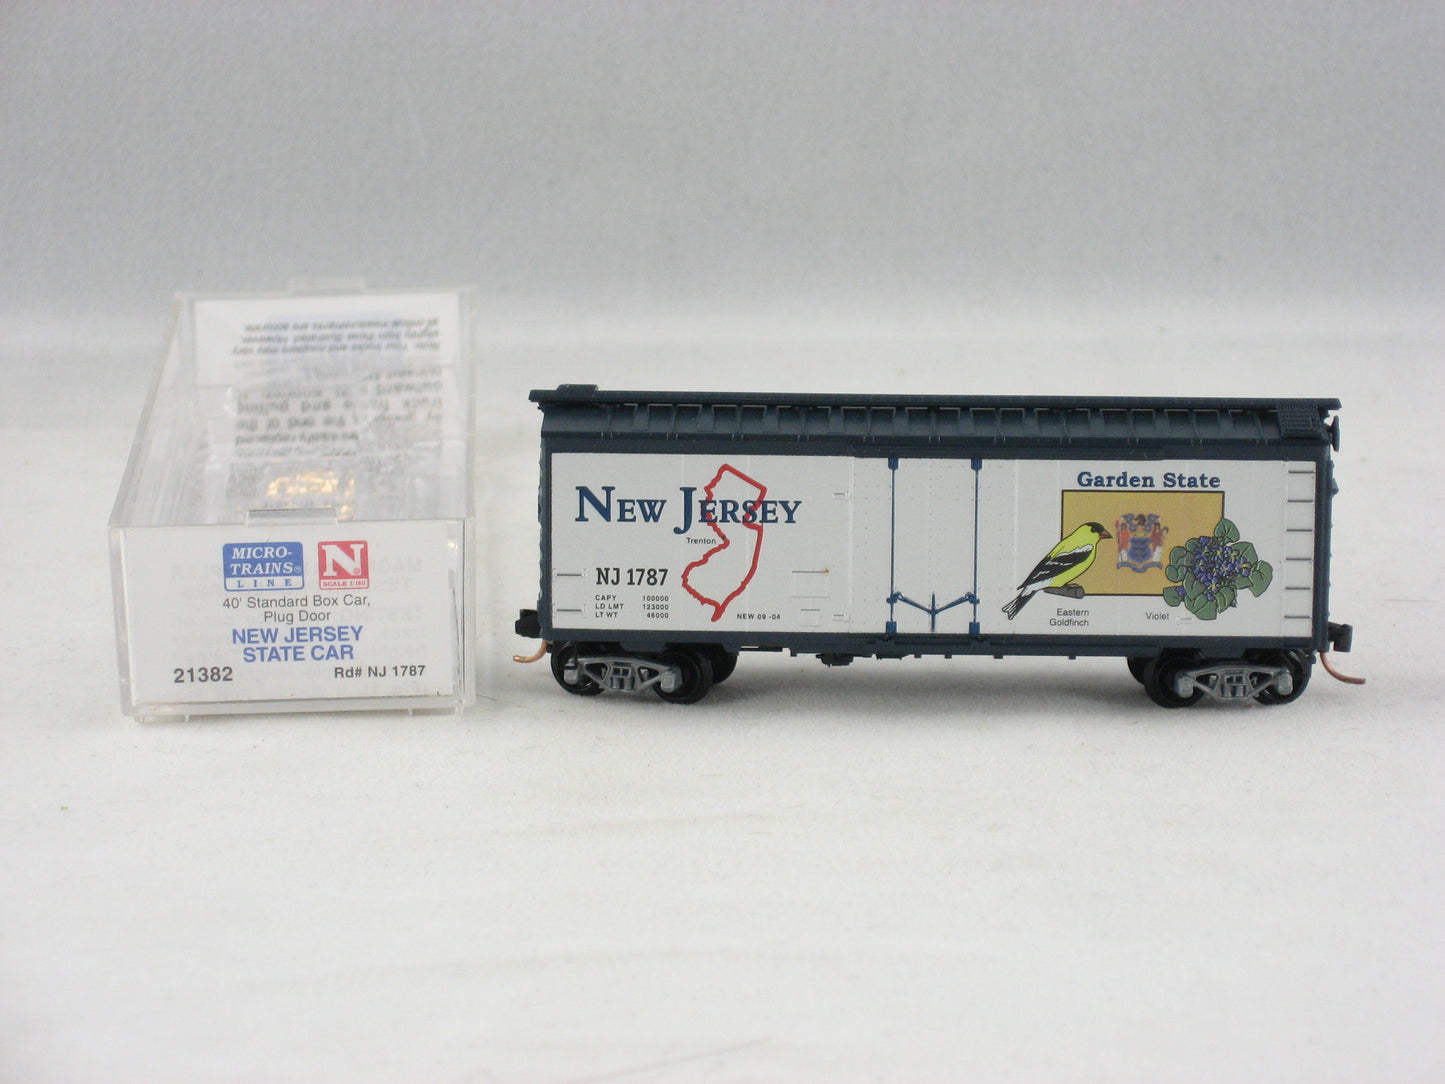 MTL-21382 - 40' Standard Boxcar, Plug Door - New Jersey State Car #1787